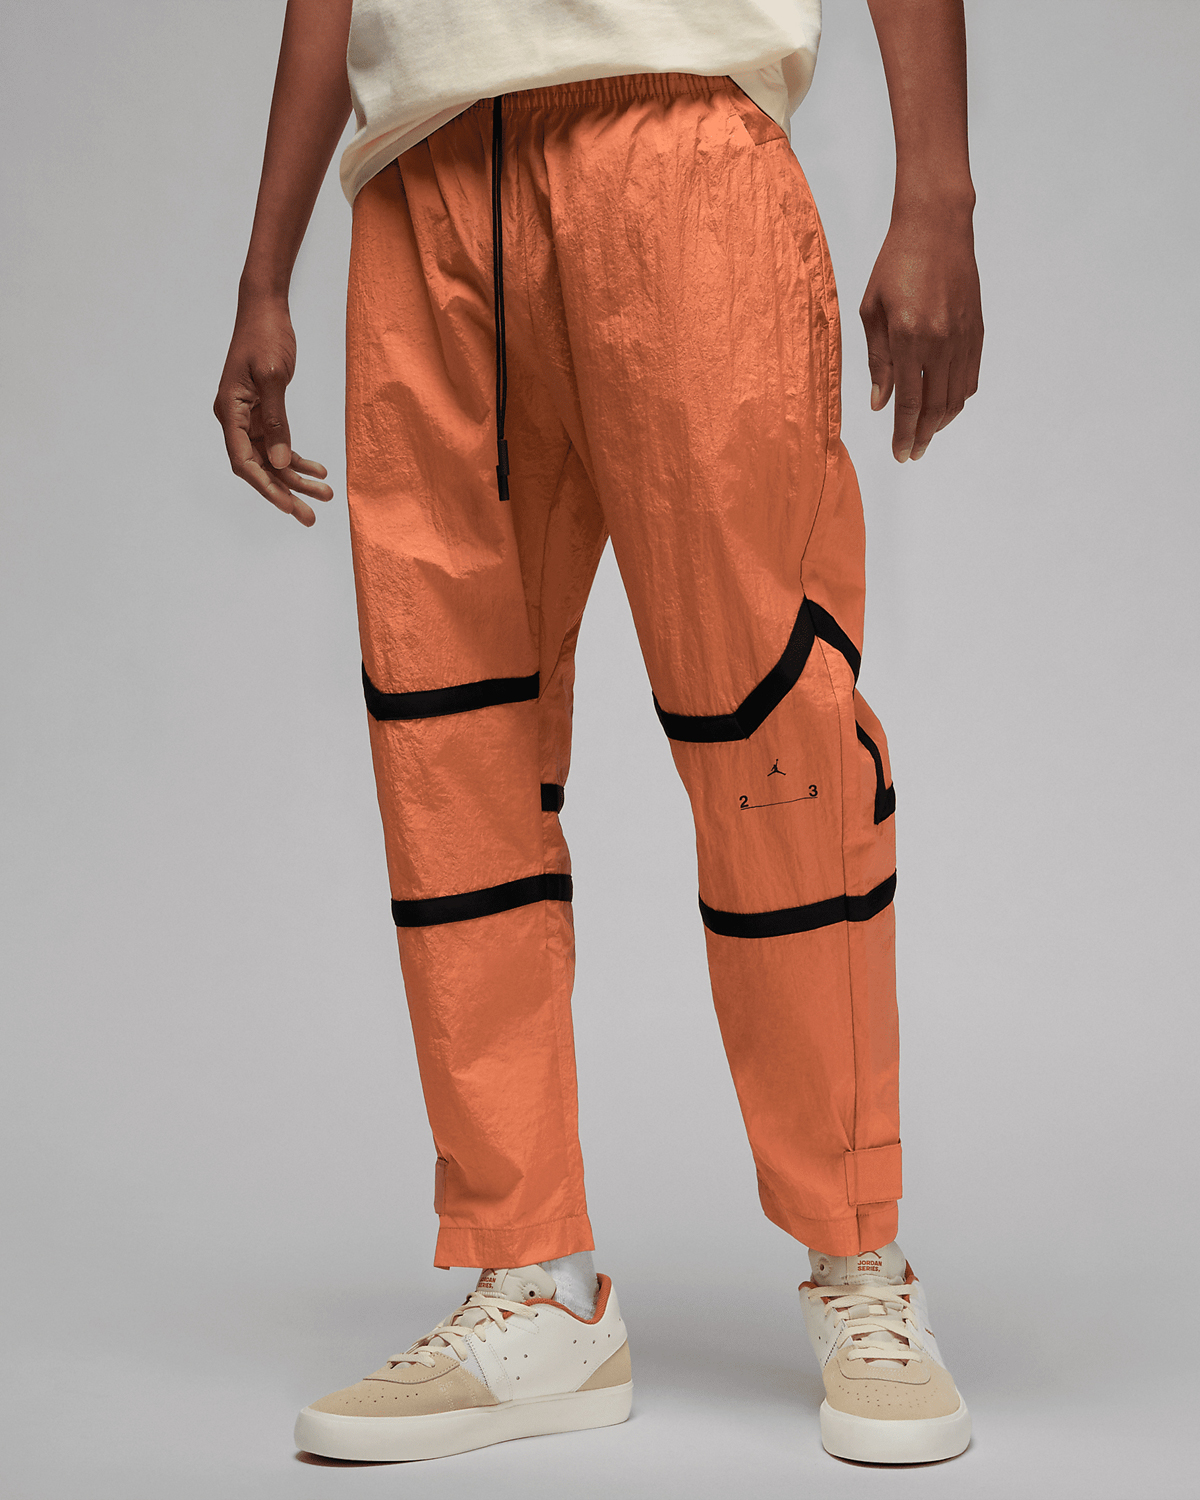 Jordan-23-Engineered-Woven-Pants-Rust-Oxide-Orange